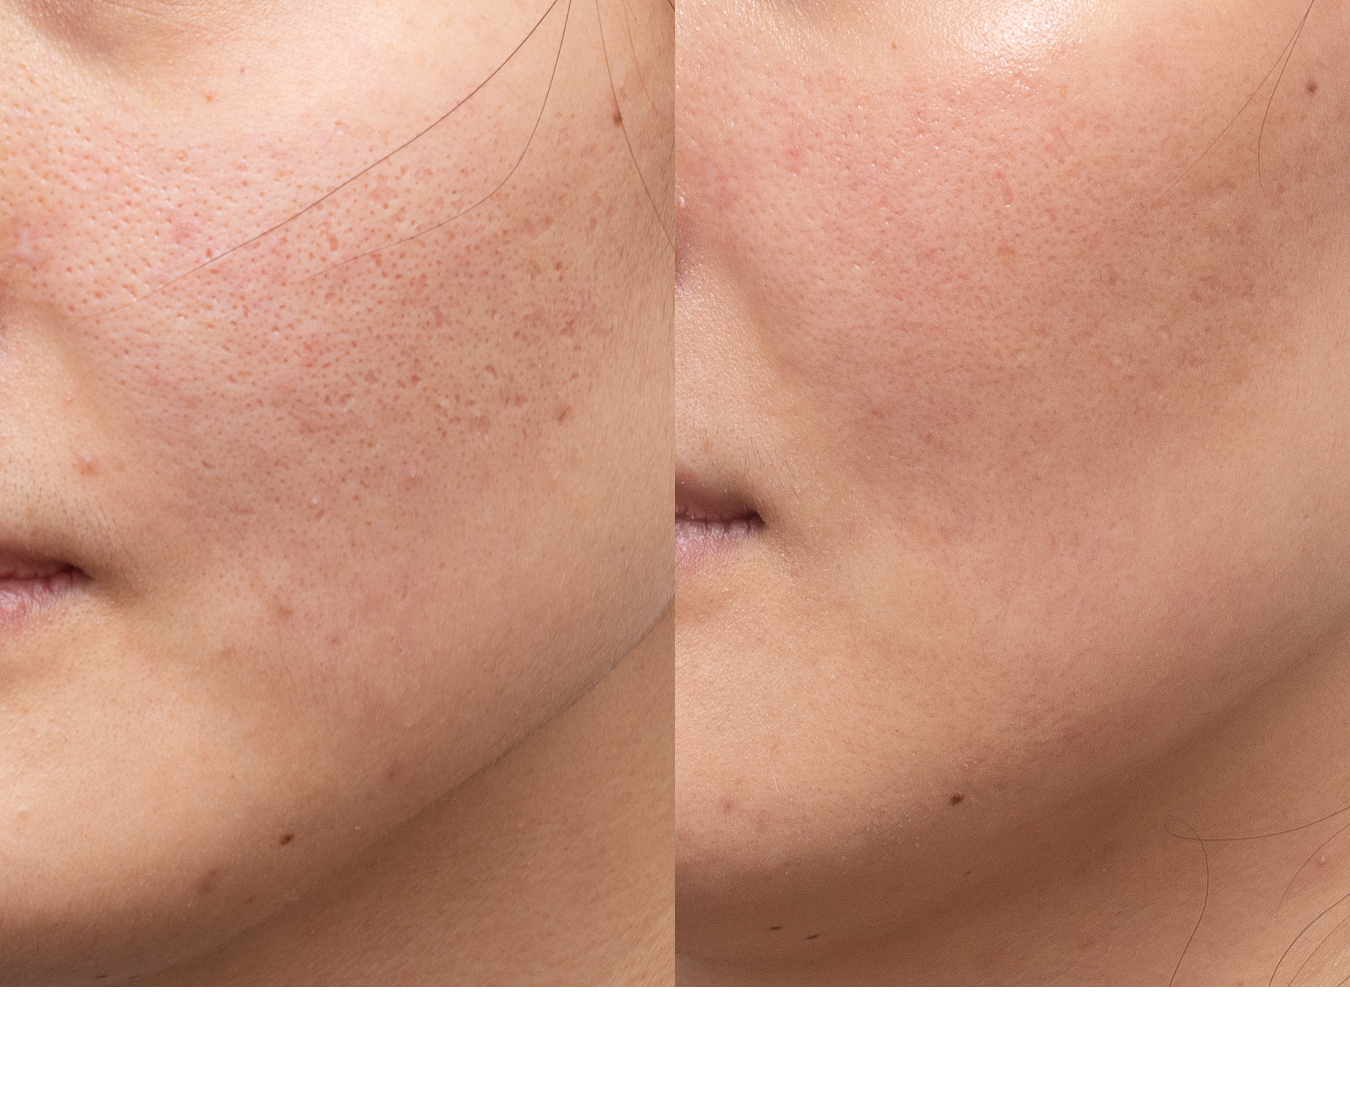 TCA CROSS icepick acne scars by Melbourne Dermatologist